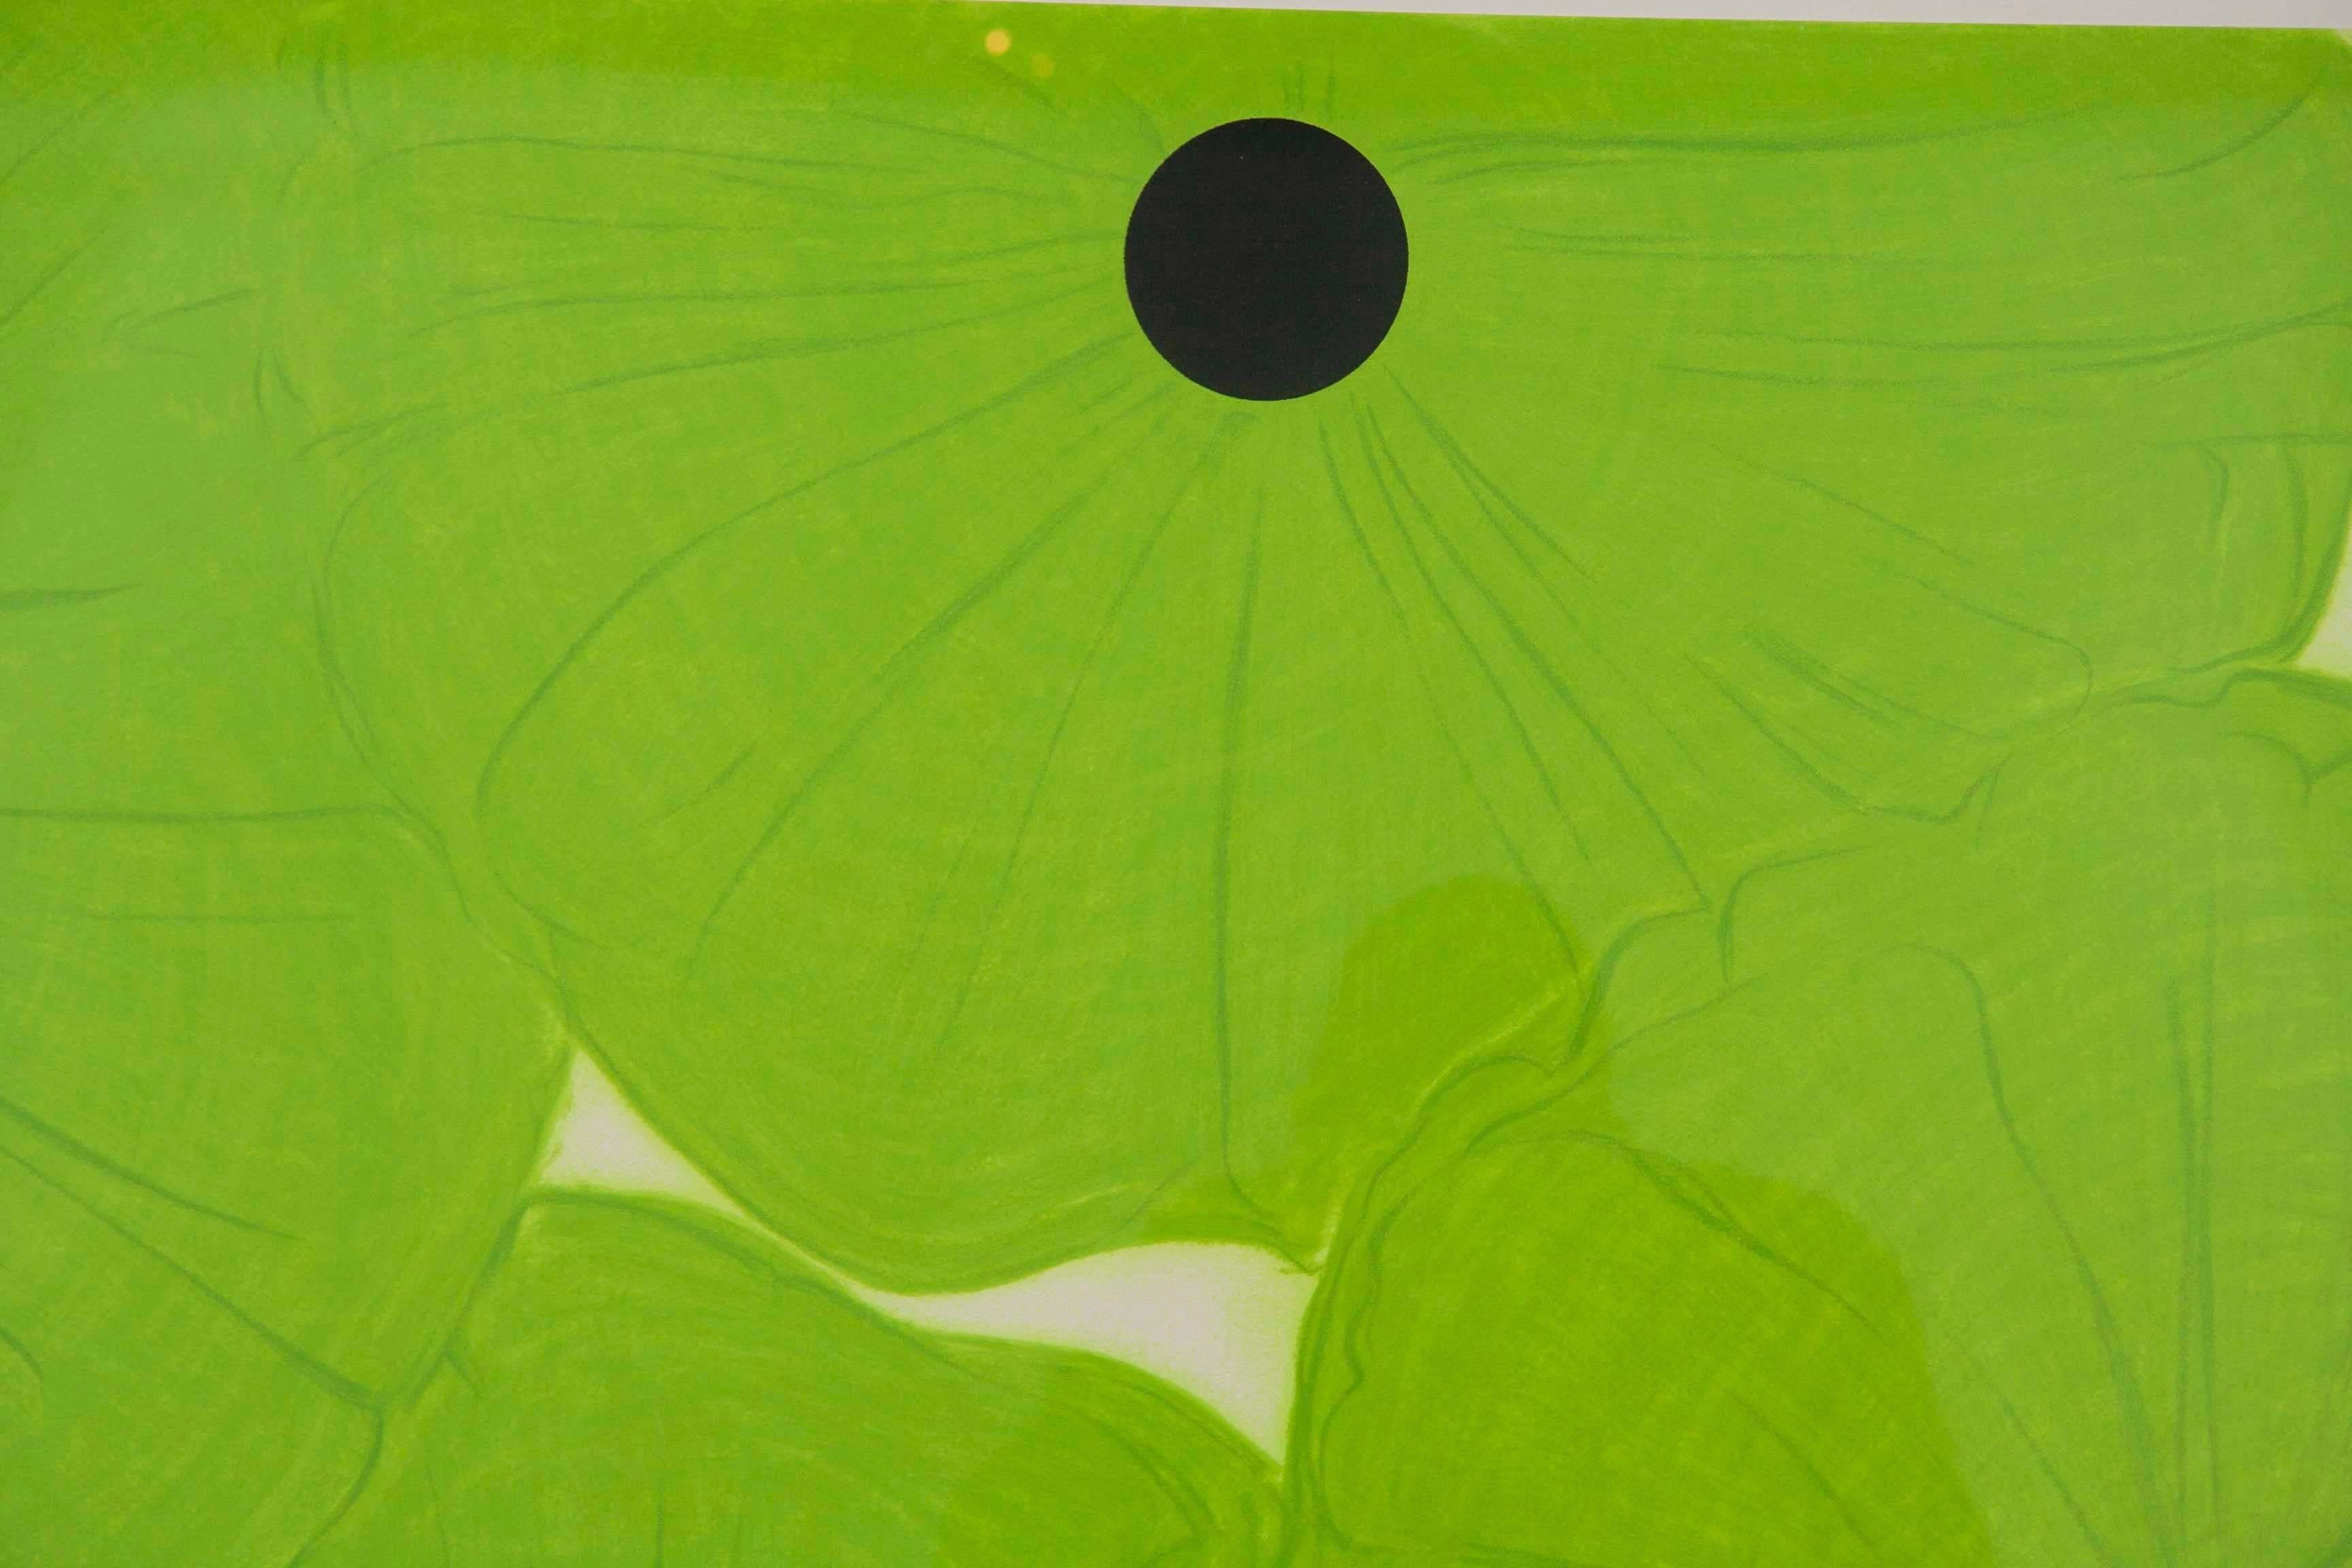  Large Silkscreen by Donald Sultan Titled Ten Greens 1